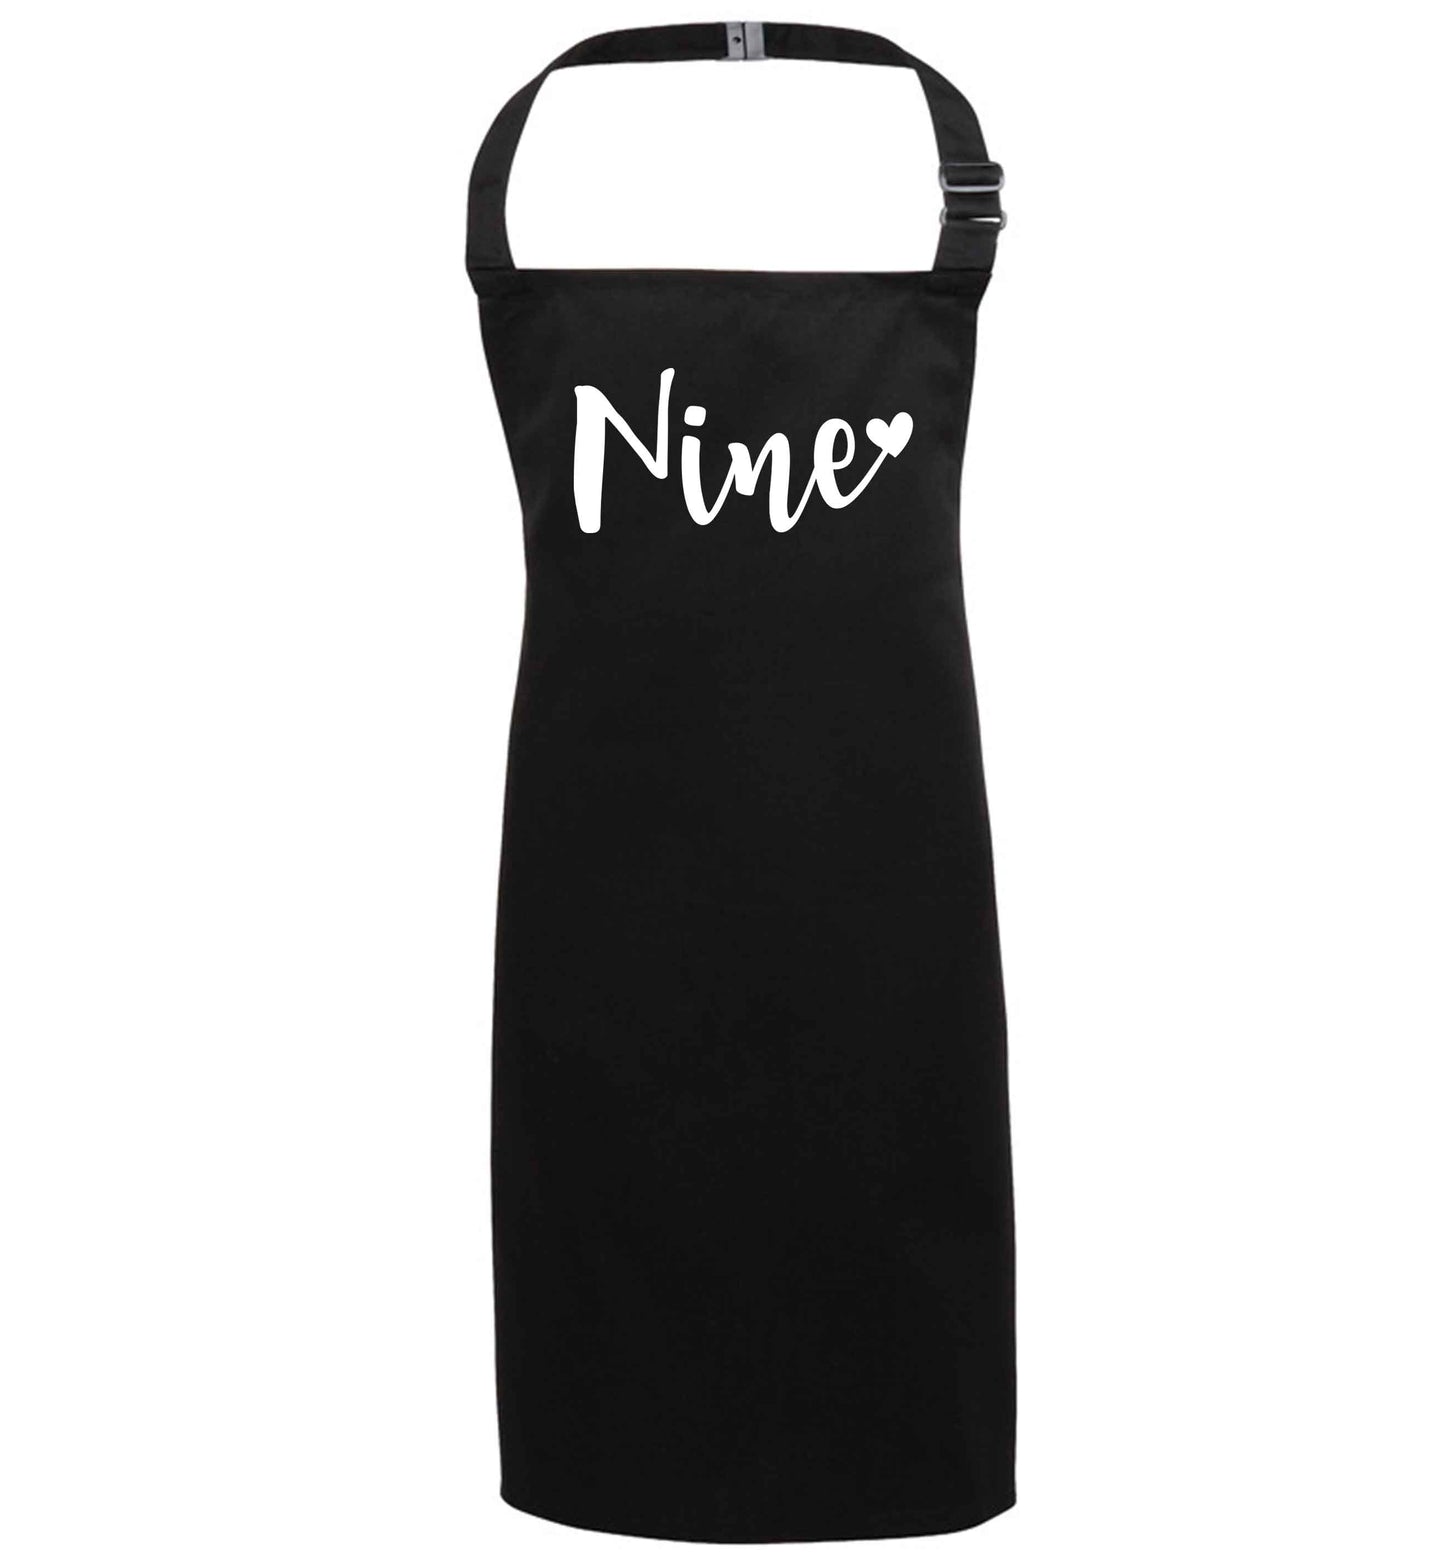 Nine and heart black apron 7-10 years